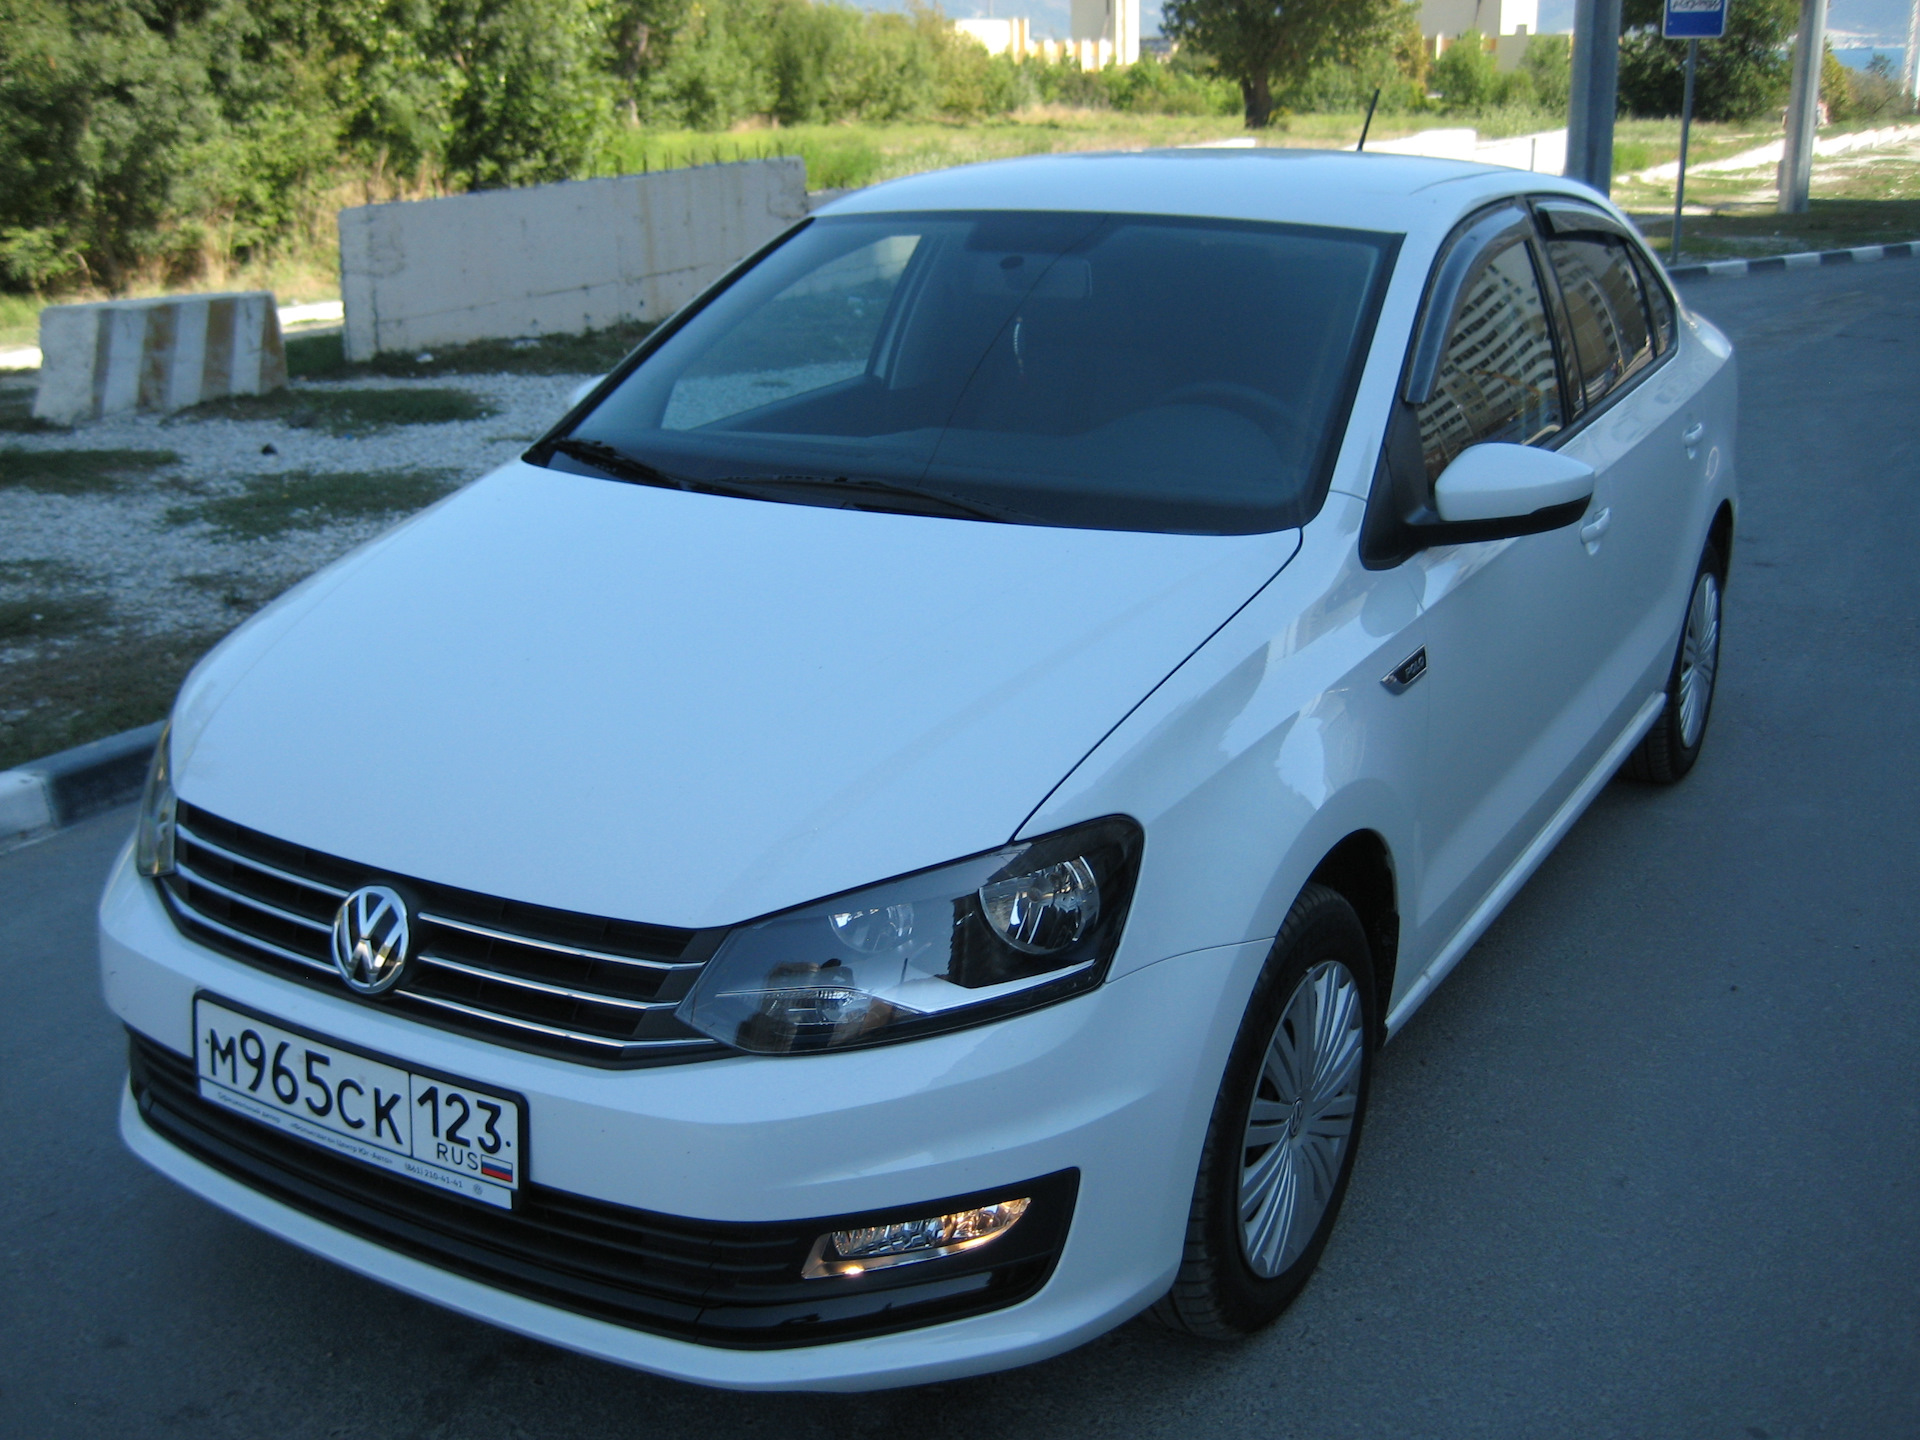 Купить volkswagen с пробегом. Volkswagen Polo sedan Allstar. Polo sedan 9a4. VW Polo sedan 2008. Polo sedan 9nf.